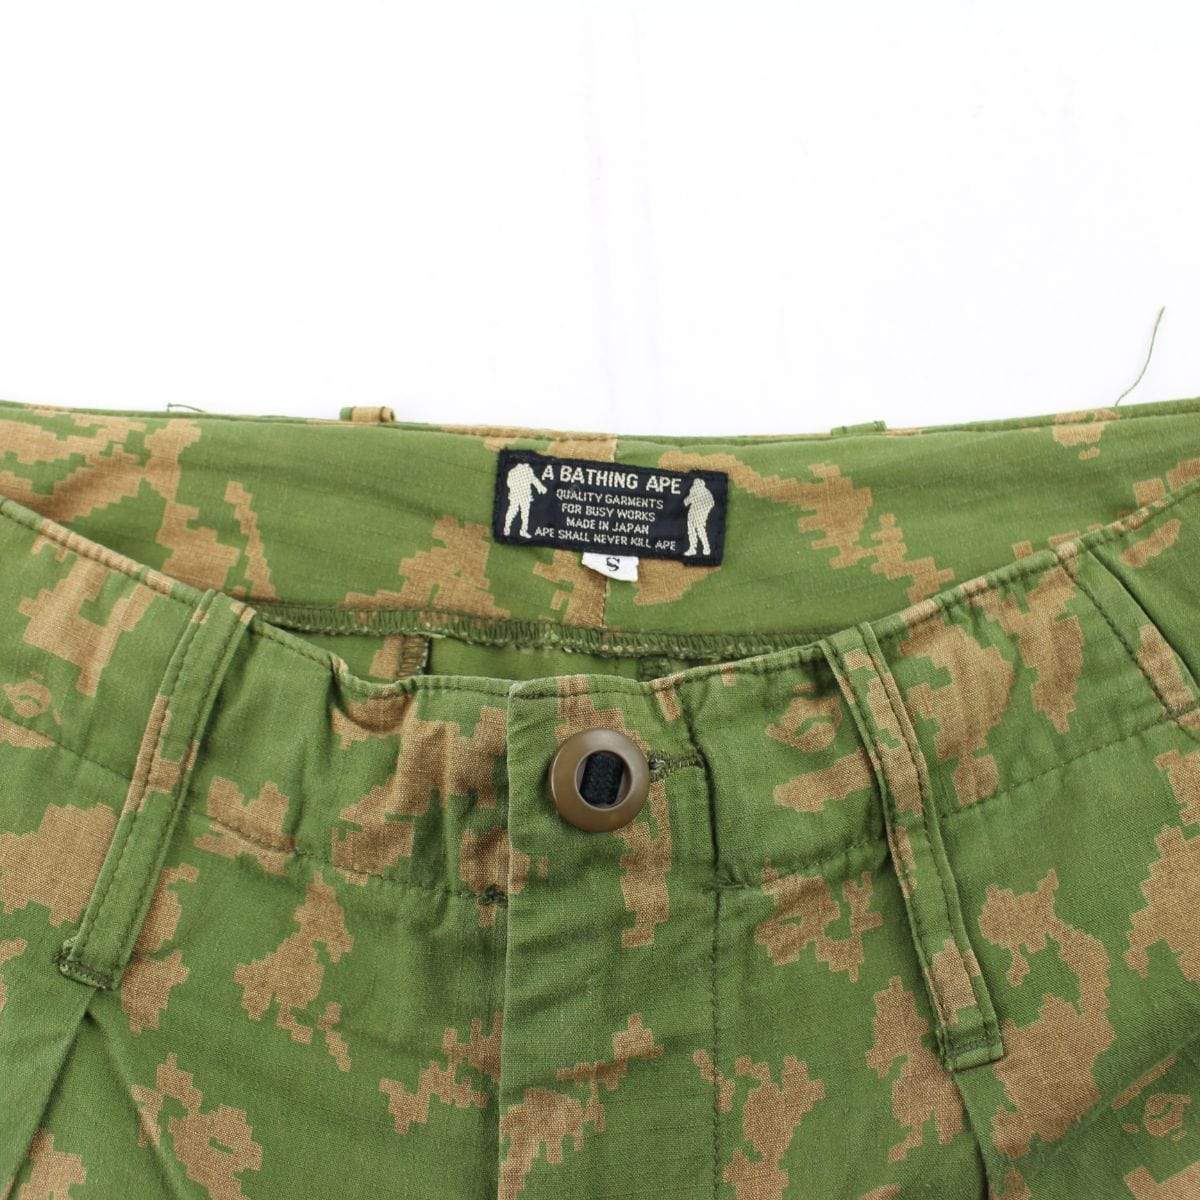 Bape Tan Green Digital Camo Pants - SaruGeneral